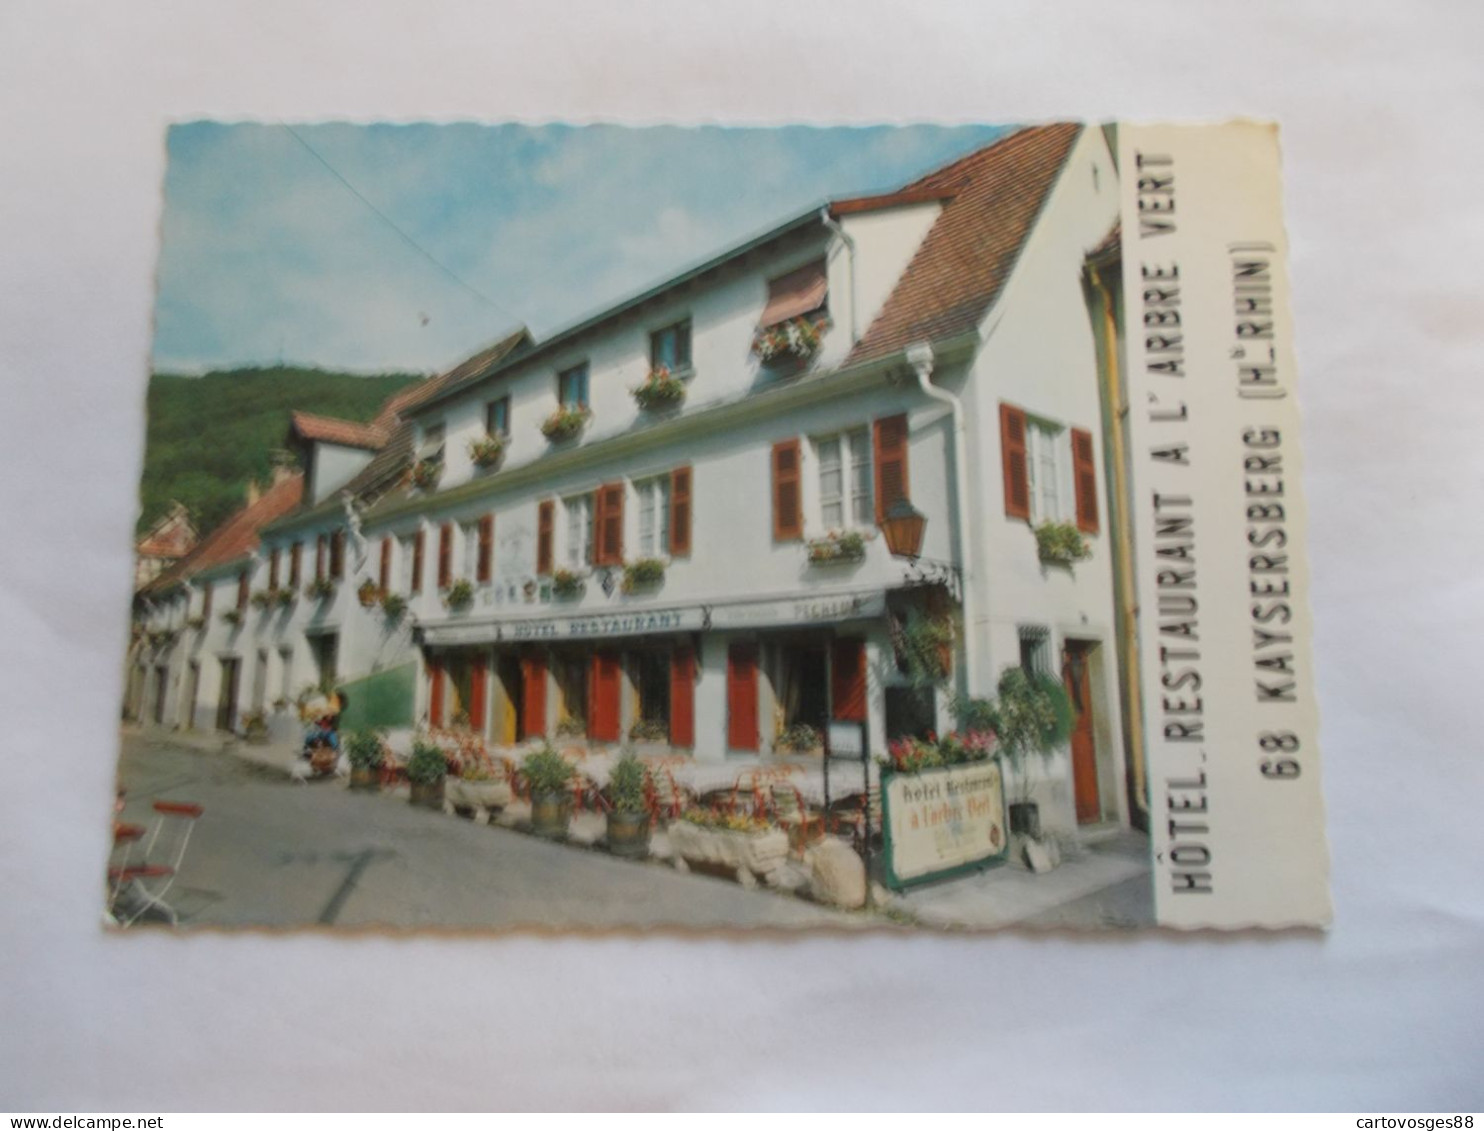 KAYSERSBERG ( 68 Haut Rhin ) HOTEL RESTAURANT A L ARBRE VERT VUE GENERALE DEVANTURE A.KIENTY Proprietaire - Kaysersberg